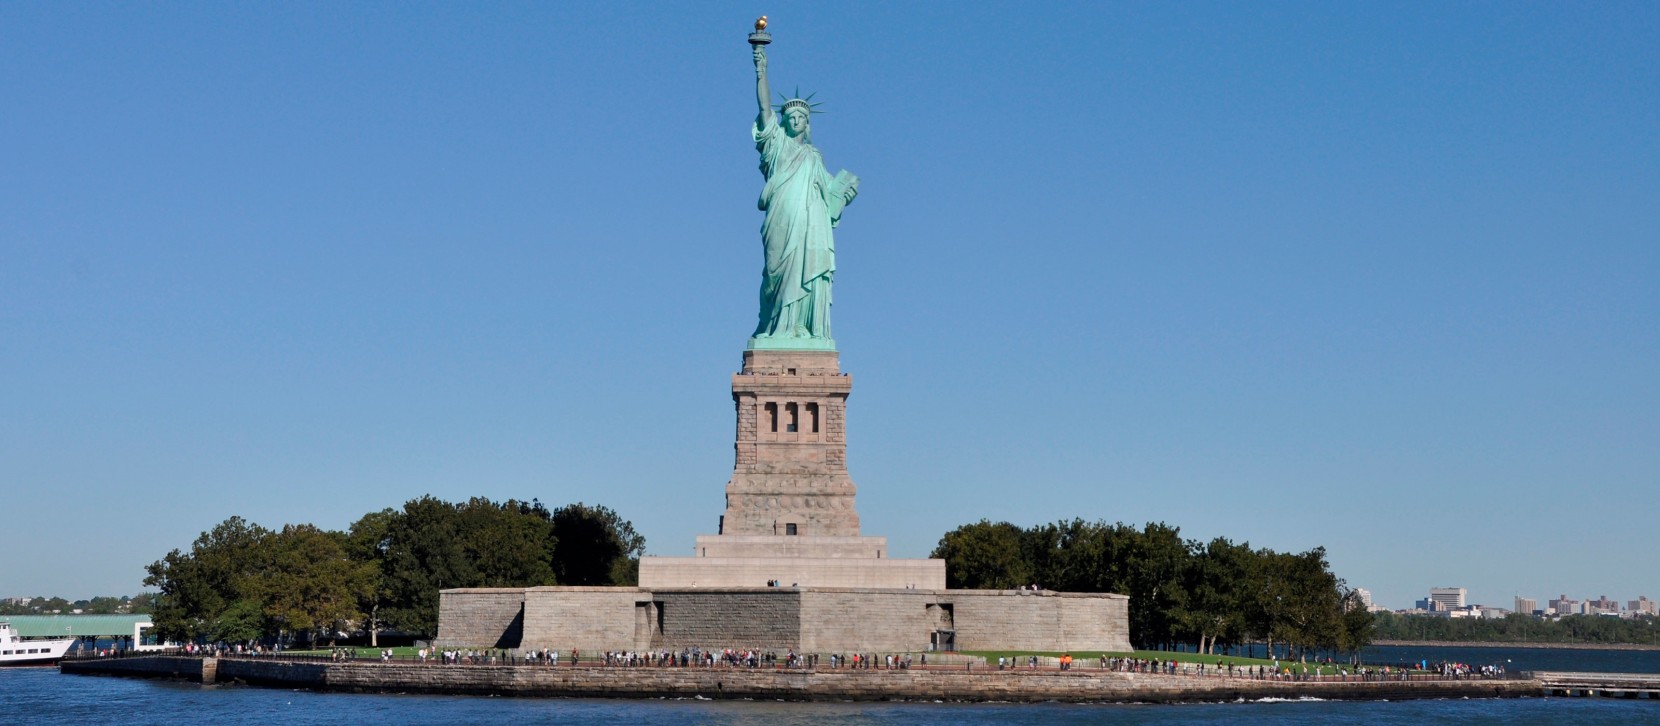 Statue of Liberty overlooking New York harbor